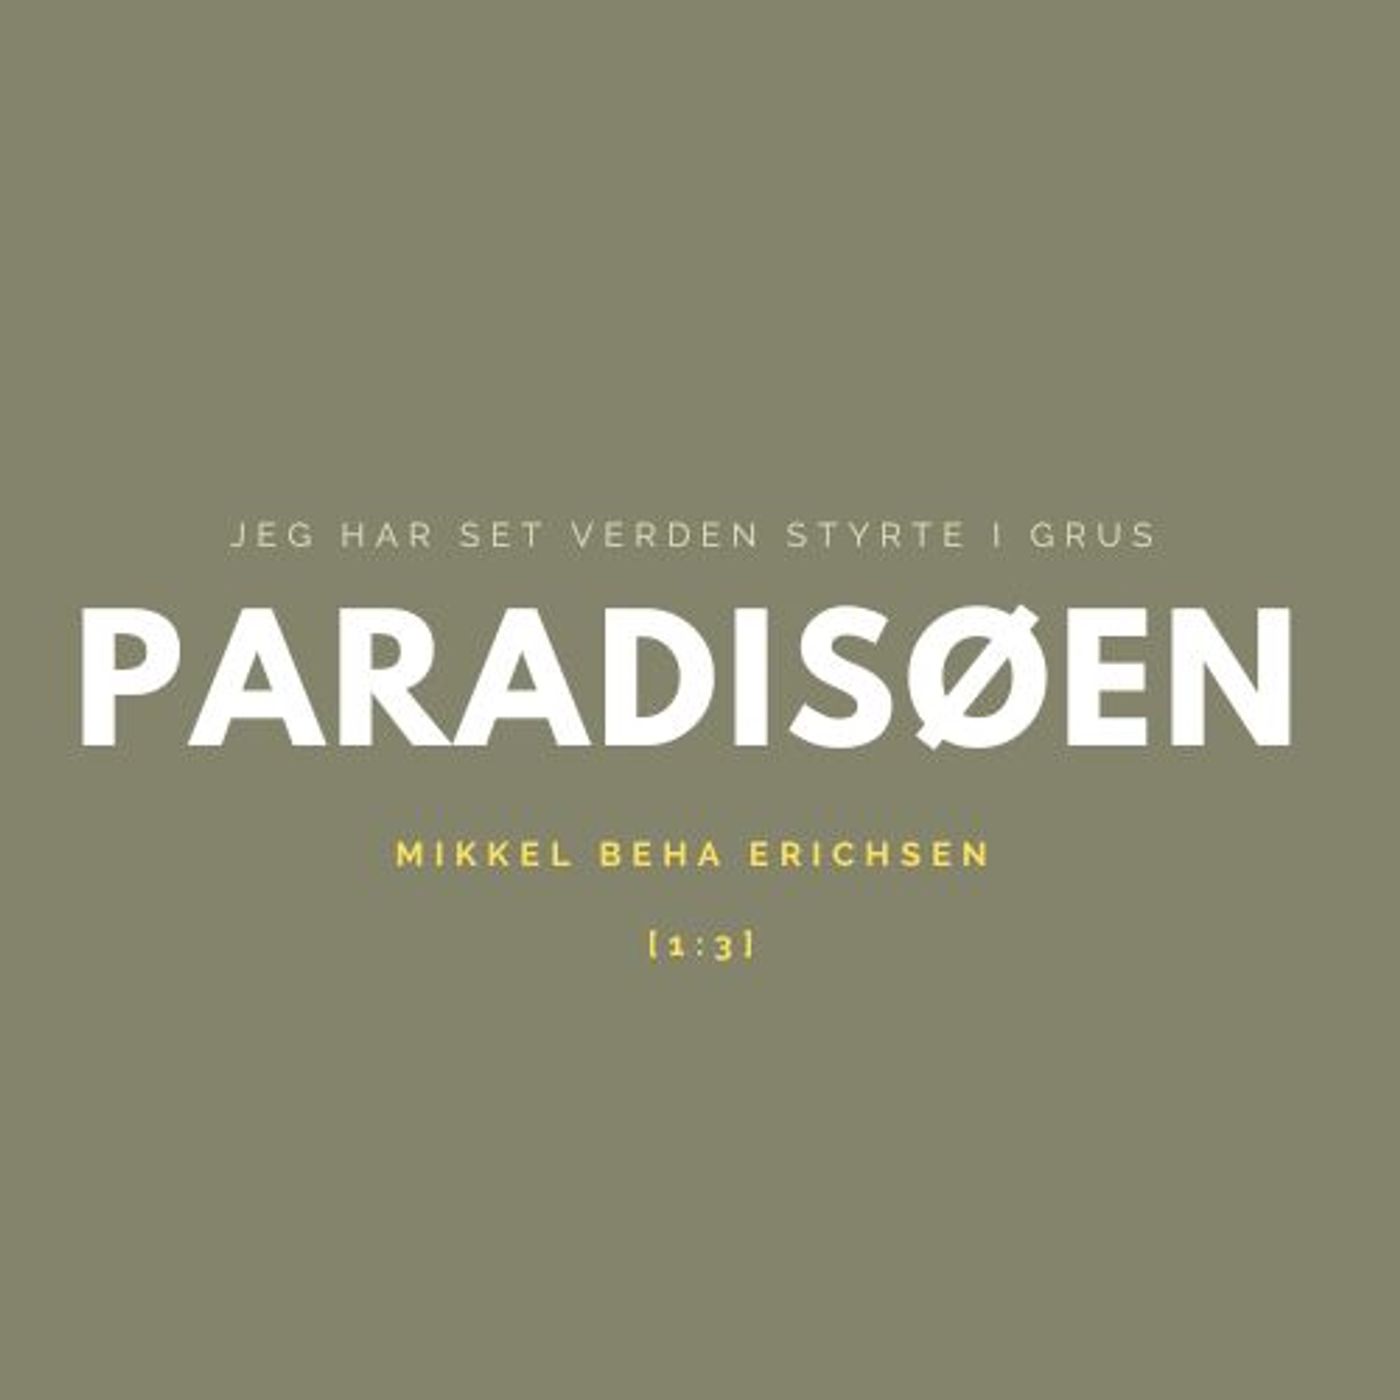 PARADISØEN - Mikkel Beha Erichsen i Fransk Polynesien